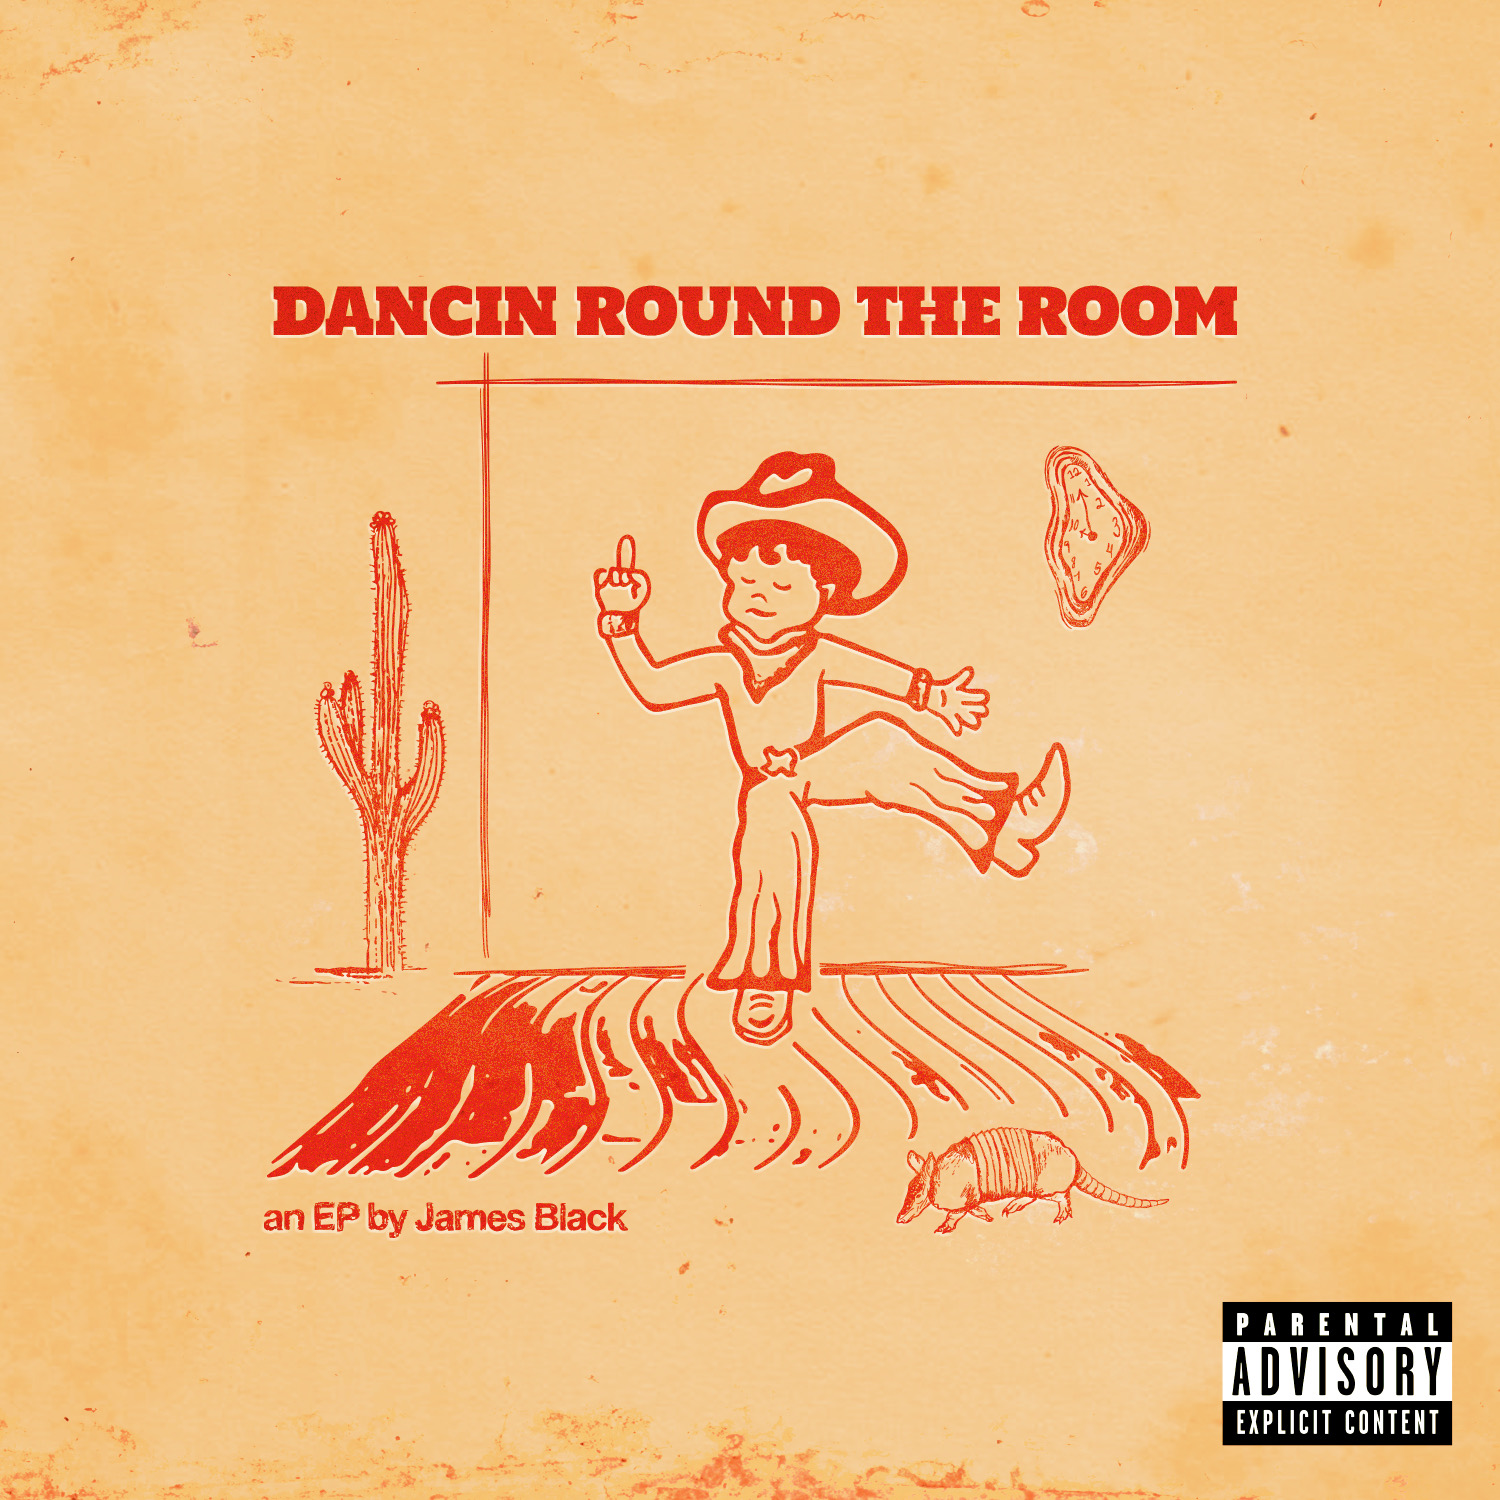 James Black ‘Dancin Round The Room’ EP album artwork